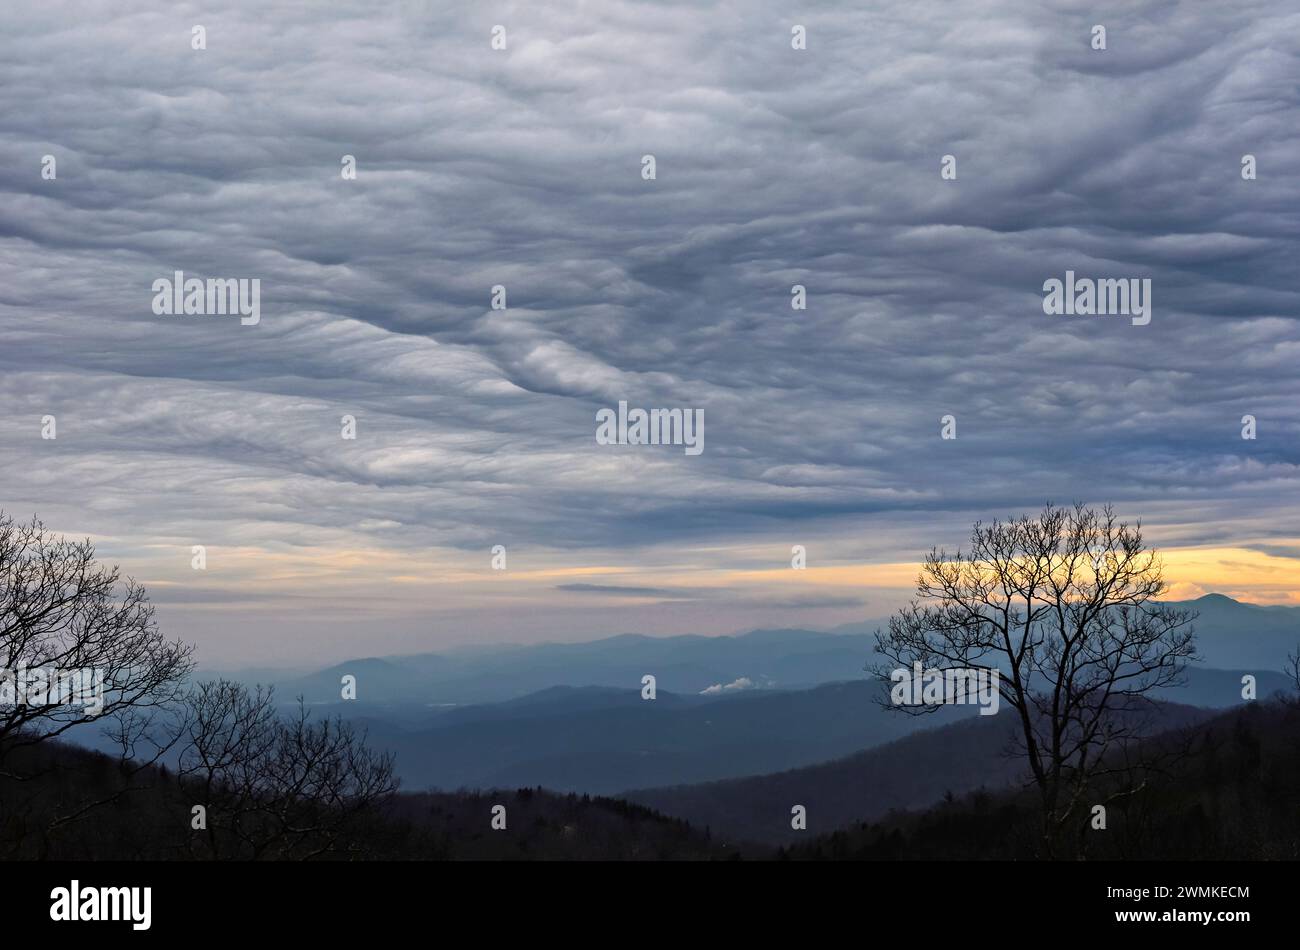 Bewölkter Himmel über den Silhouetten der Blue Ridge Mountains bei Sonnenuntergang in North Carolina, USA; Fairview, North Carolina, USA Stockfoto